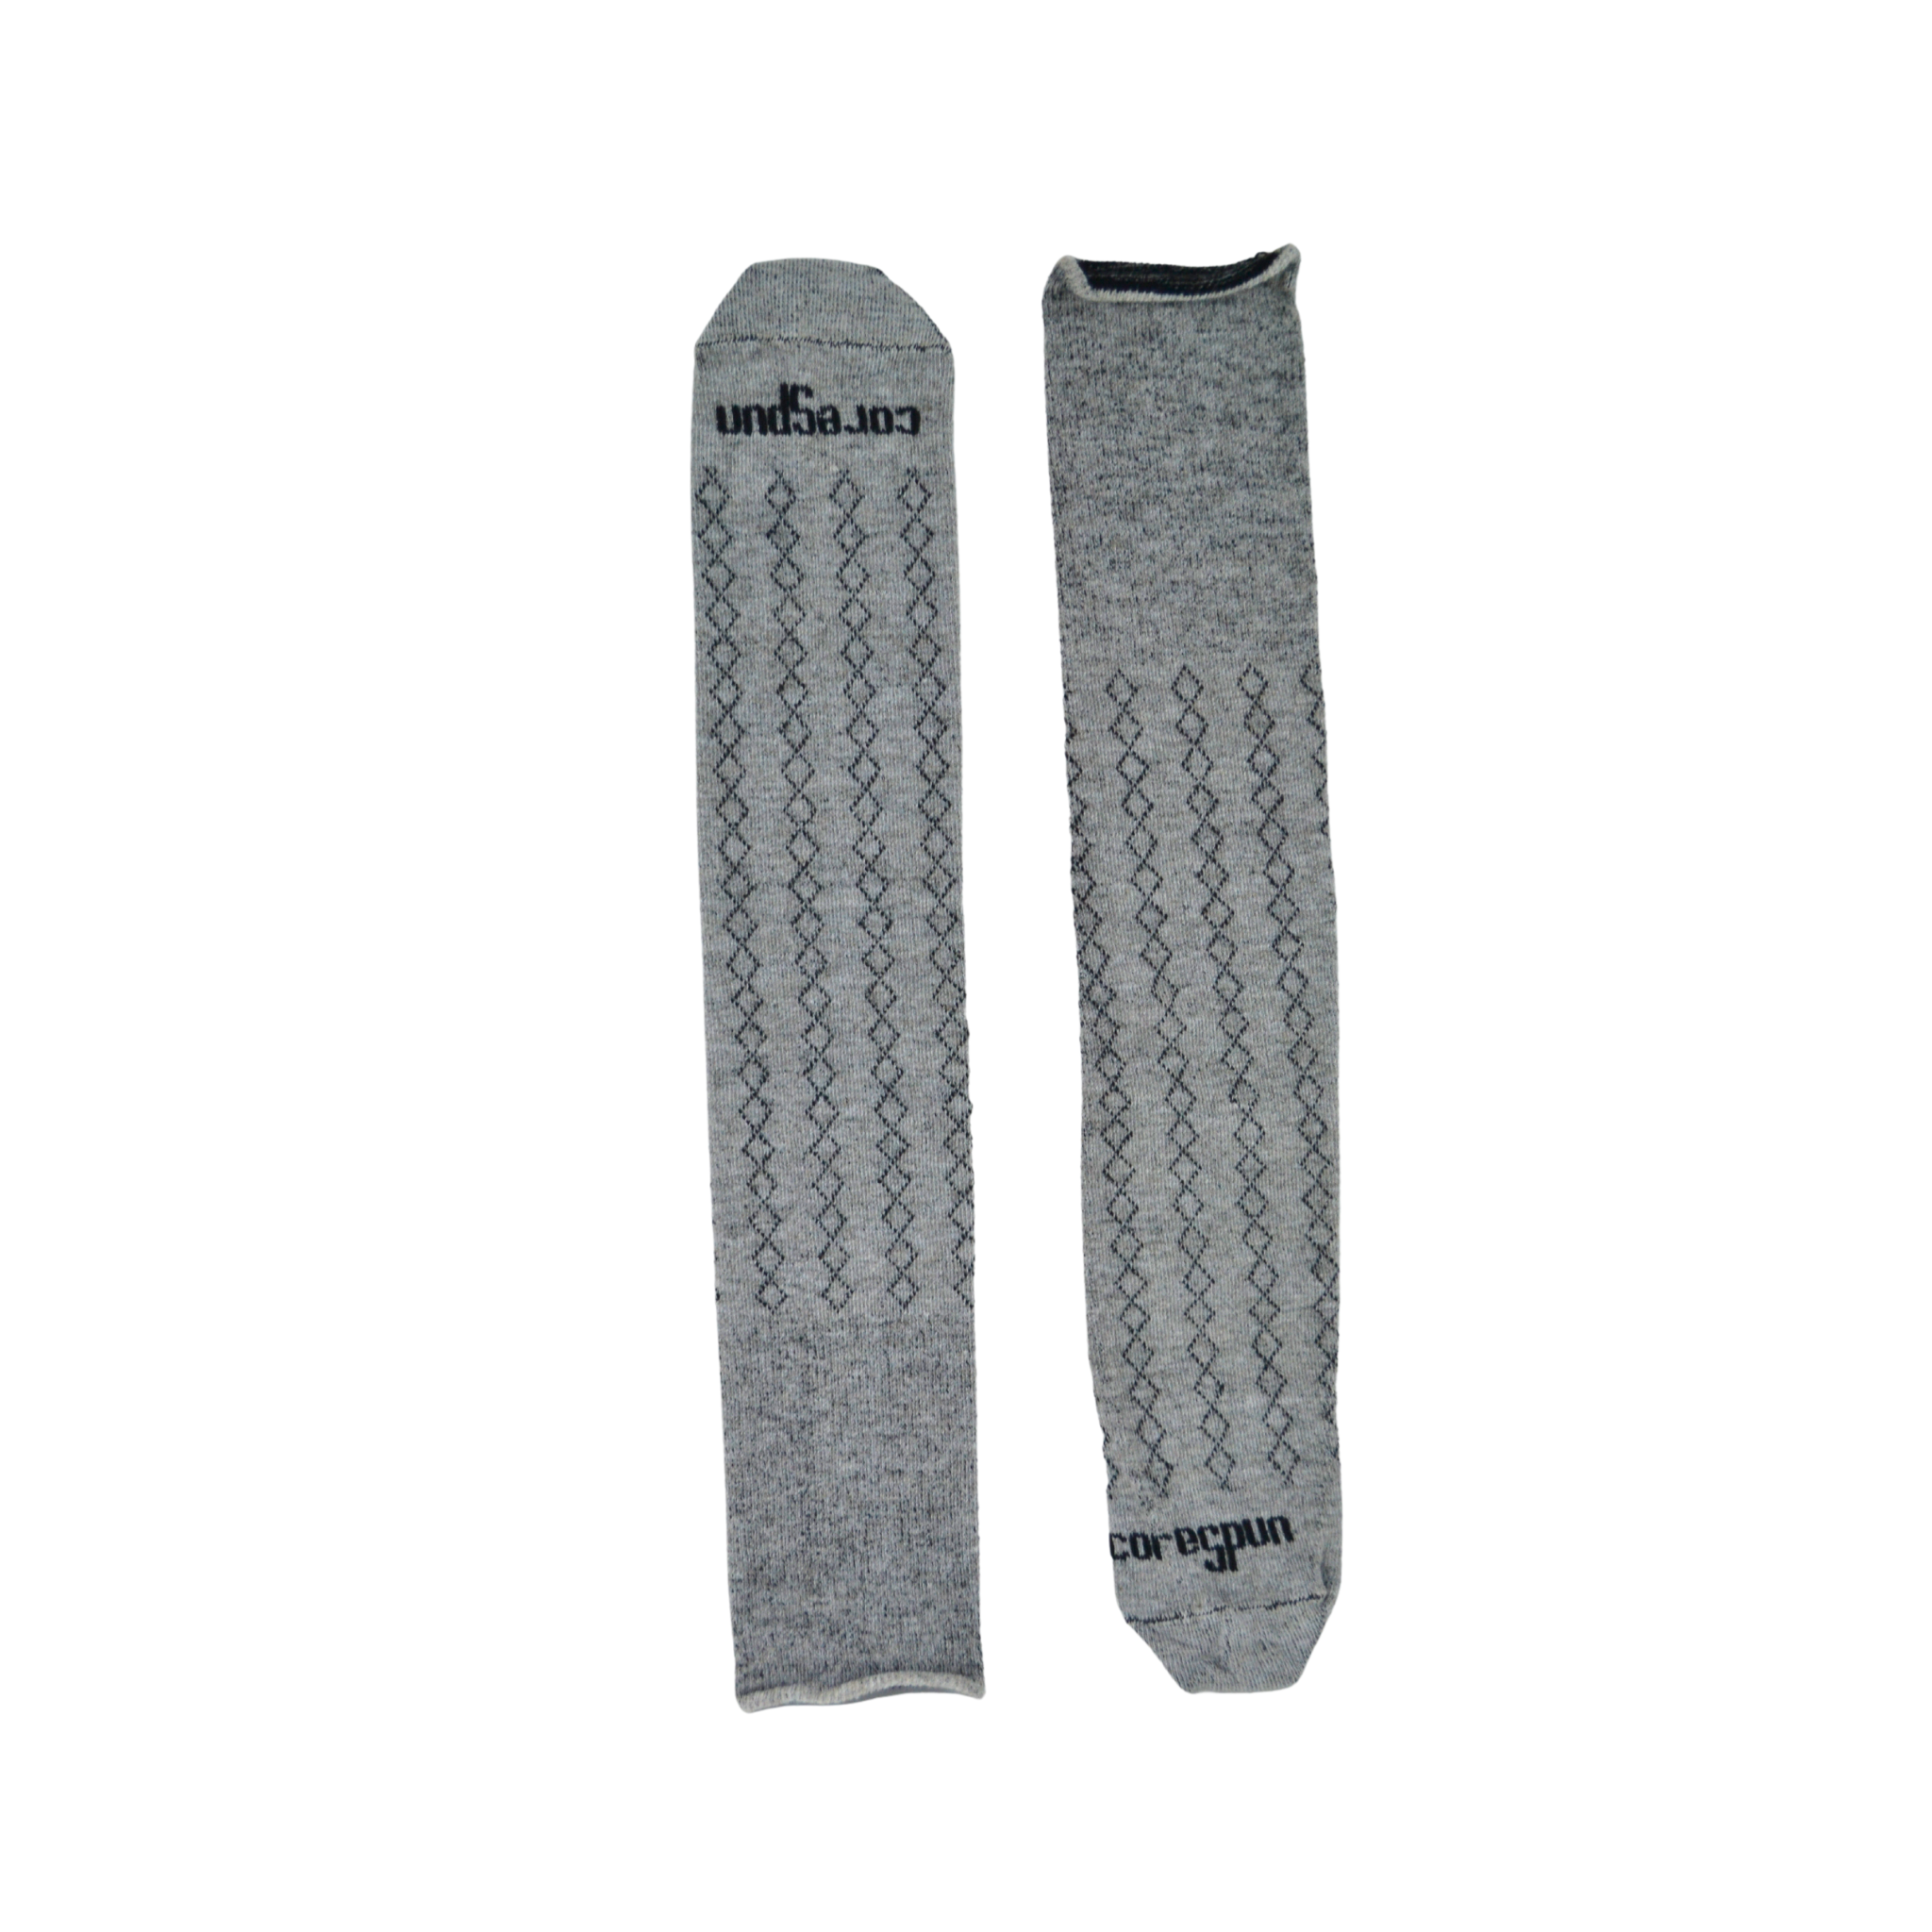 Knitrite - Patterned AFO Socks for Adults - Core Spun